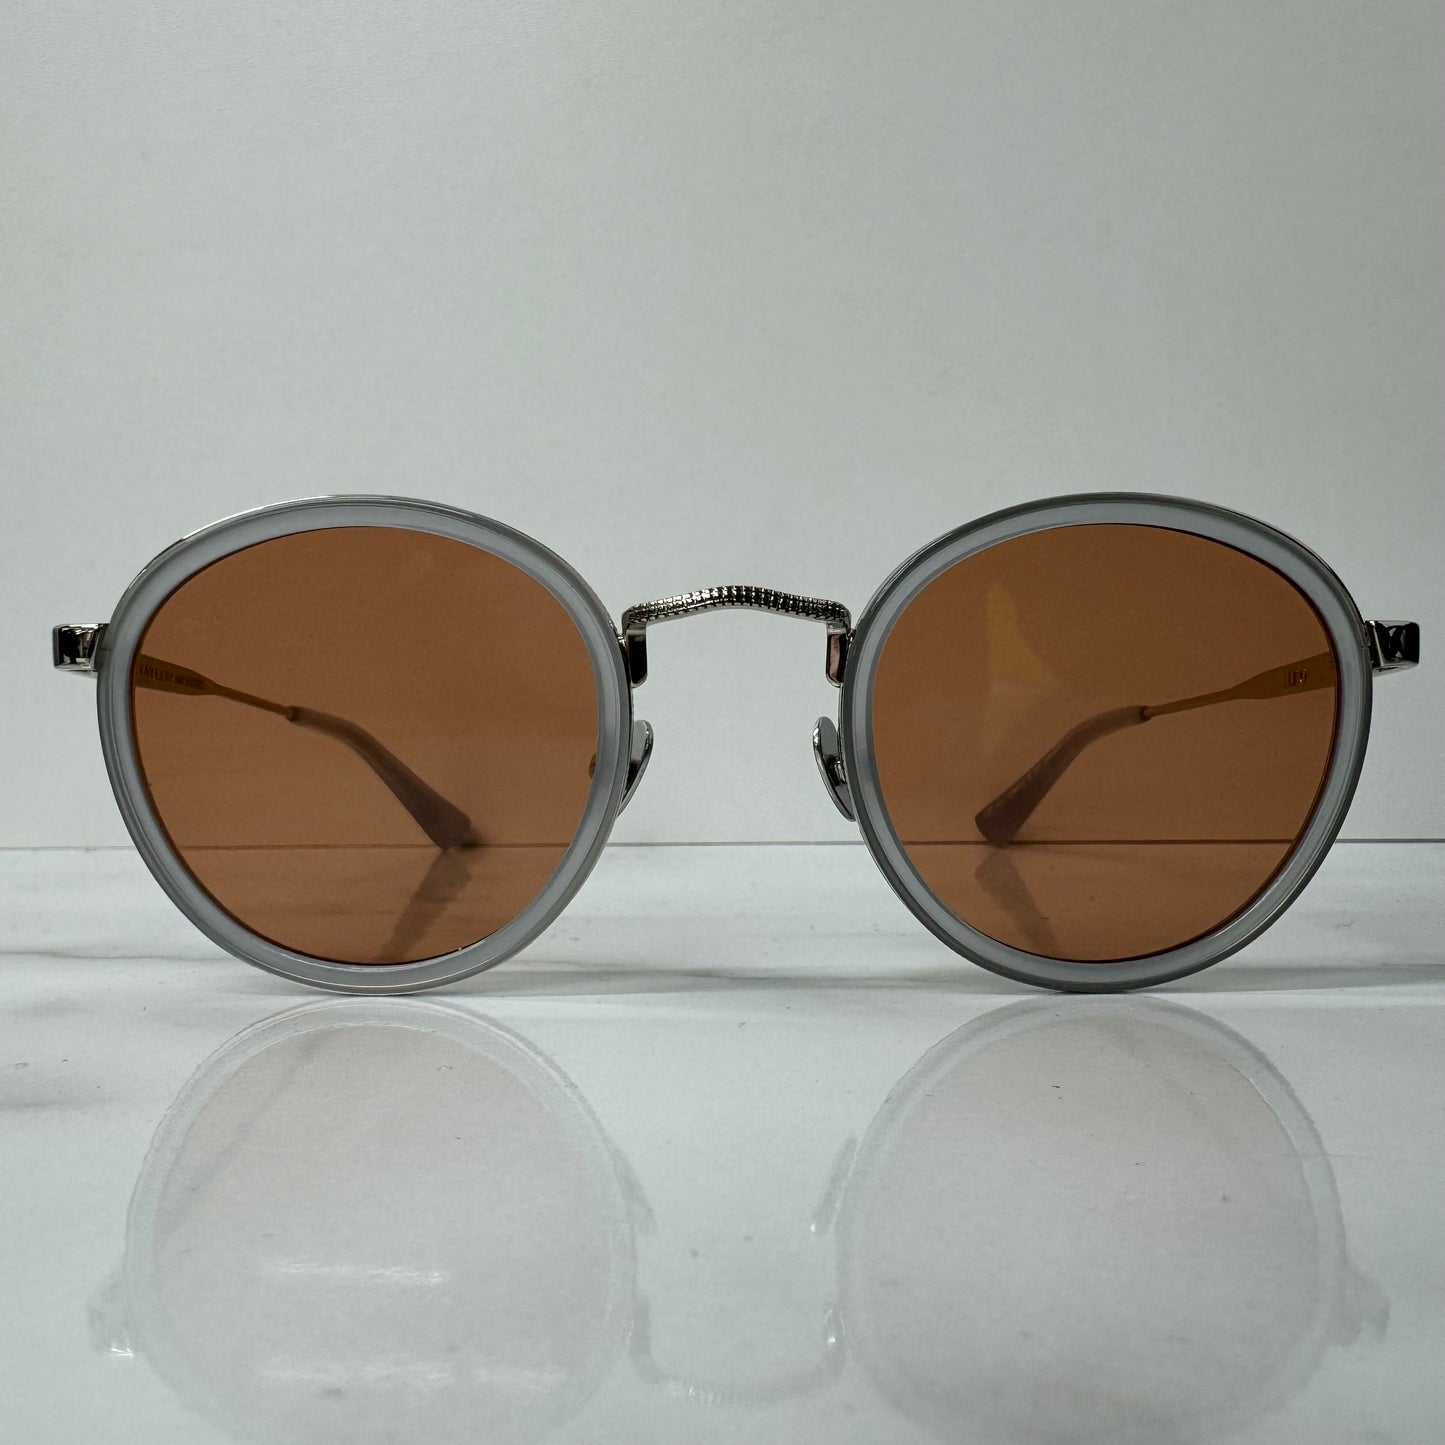 Taylor Morris Zero Grey Sunglasses - 32051 C32